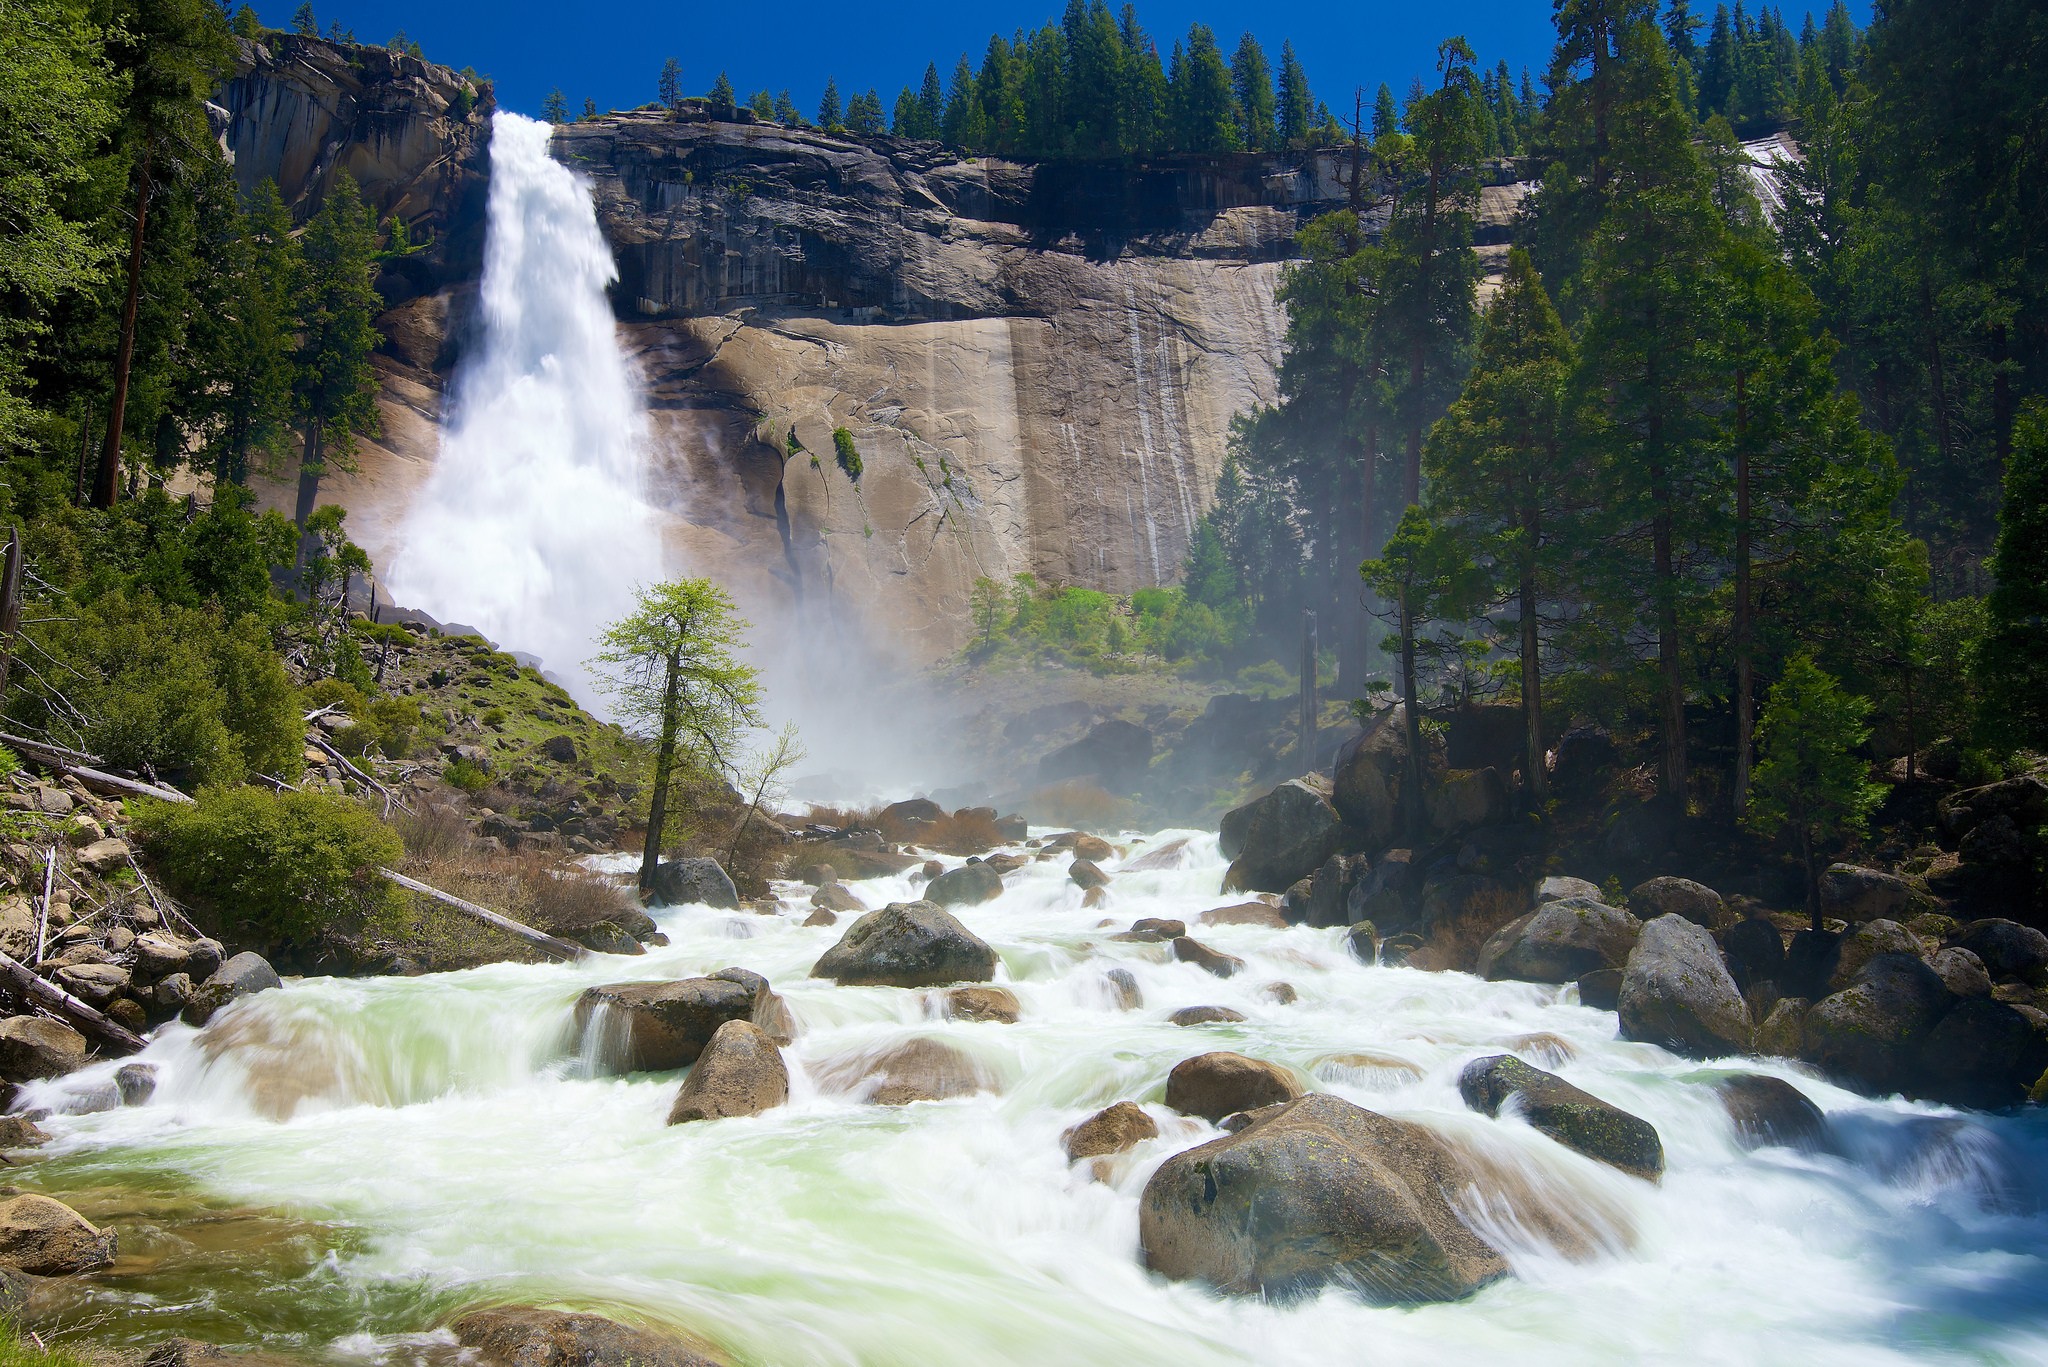 General 2048x1367 Yosemite National Park waterfall river rocks cliff USA California nature